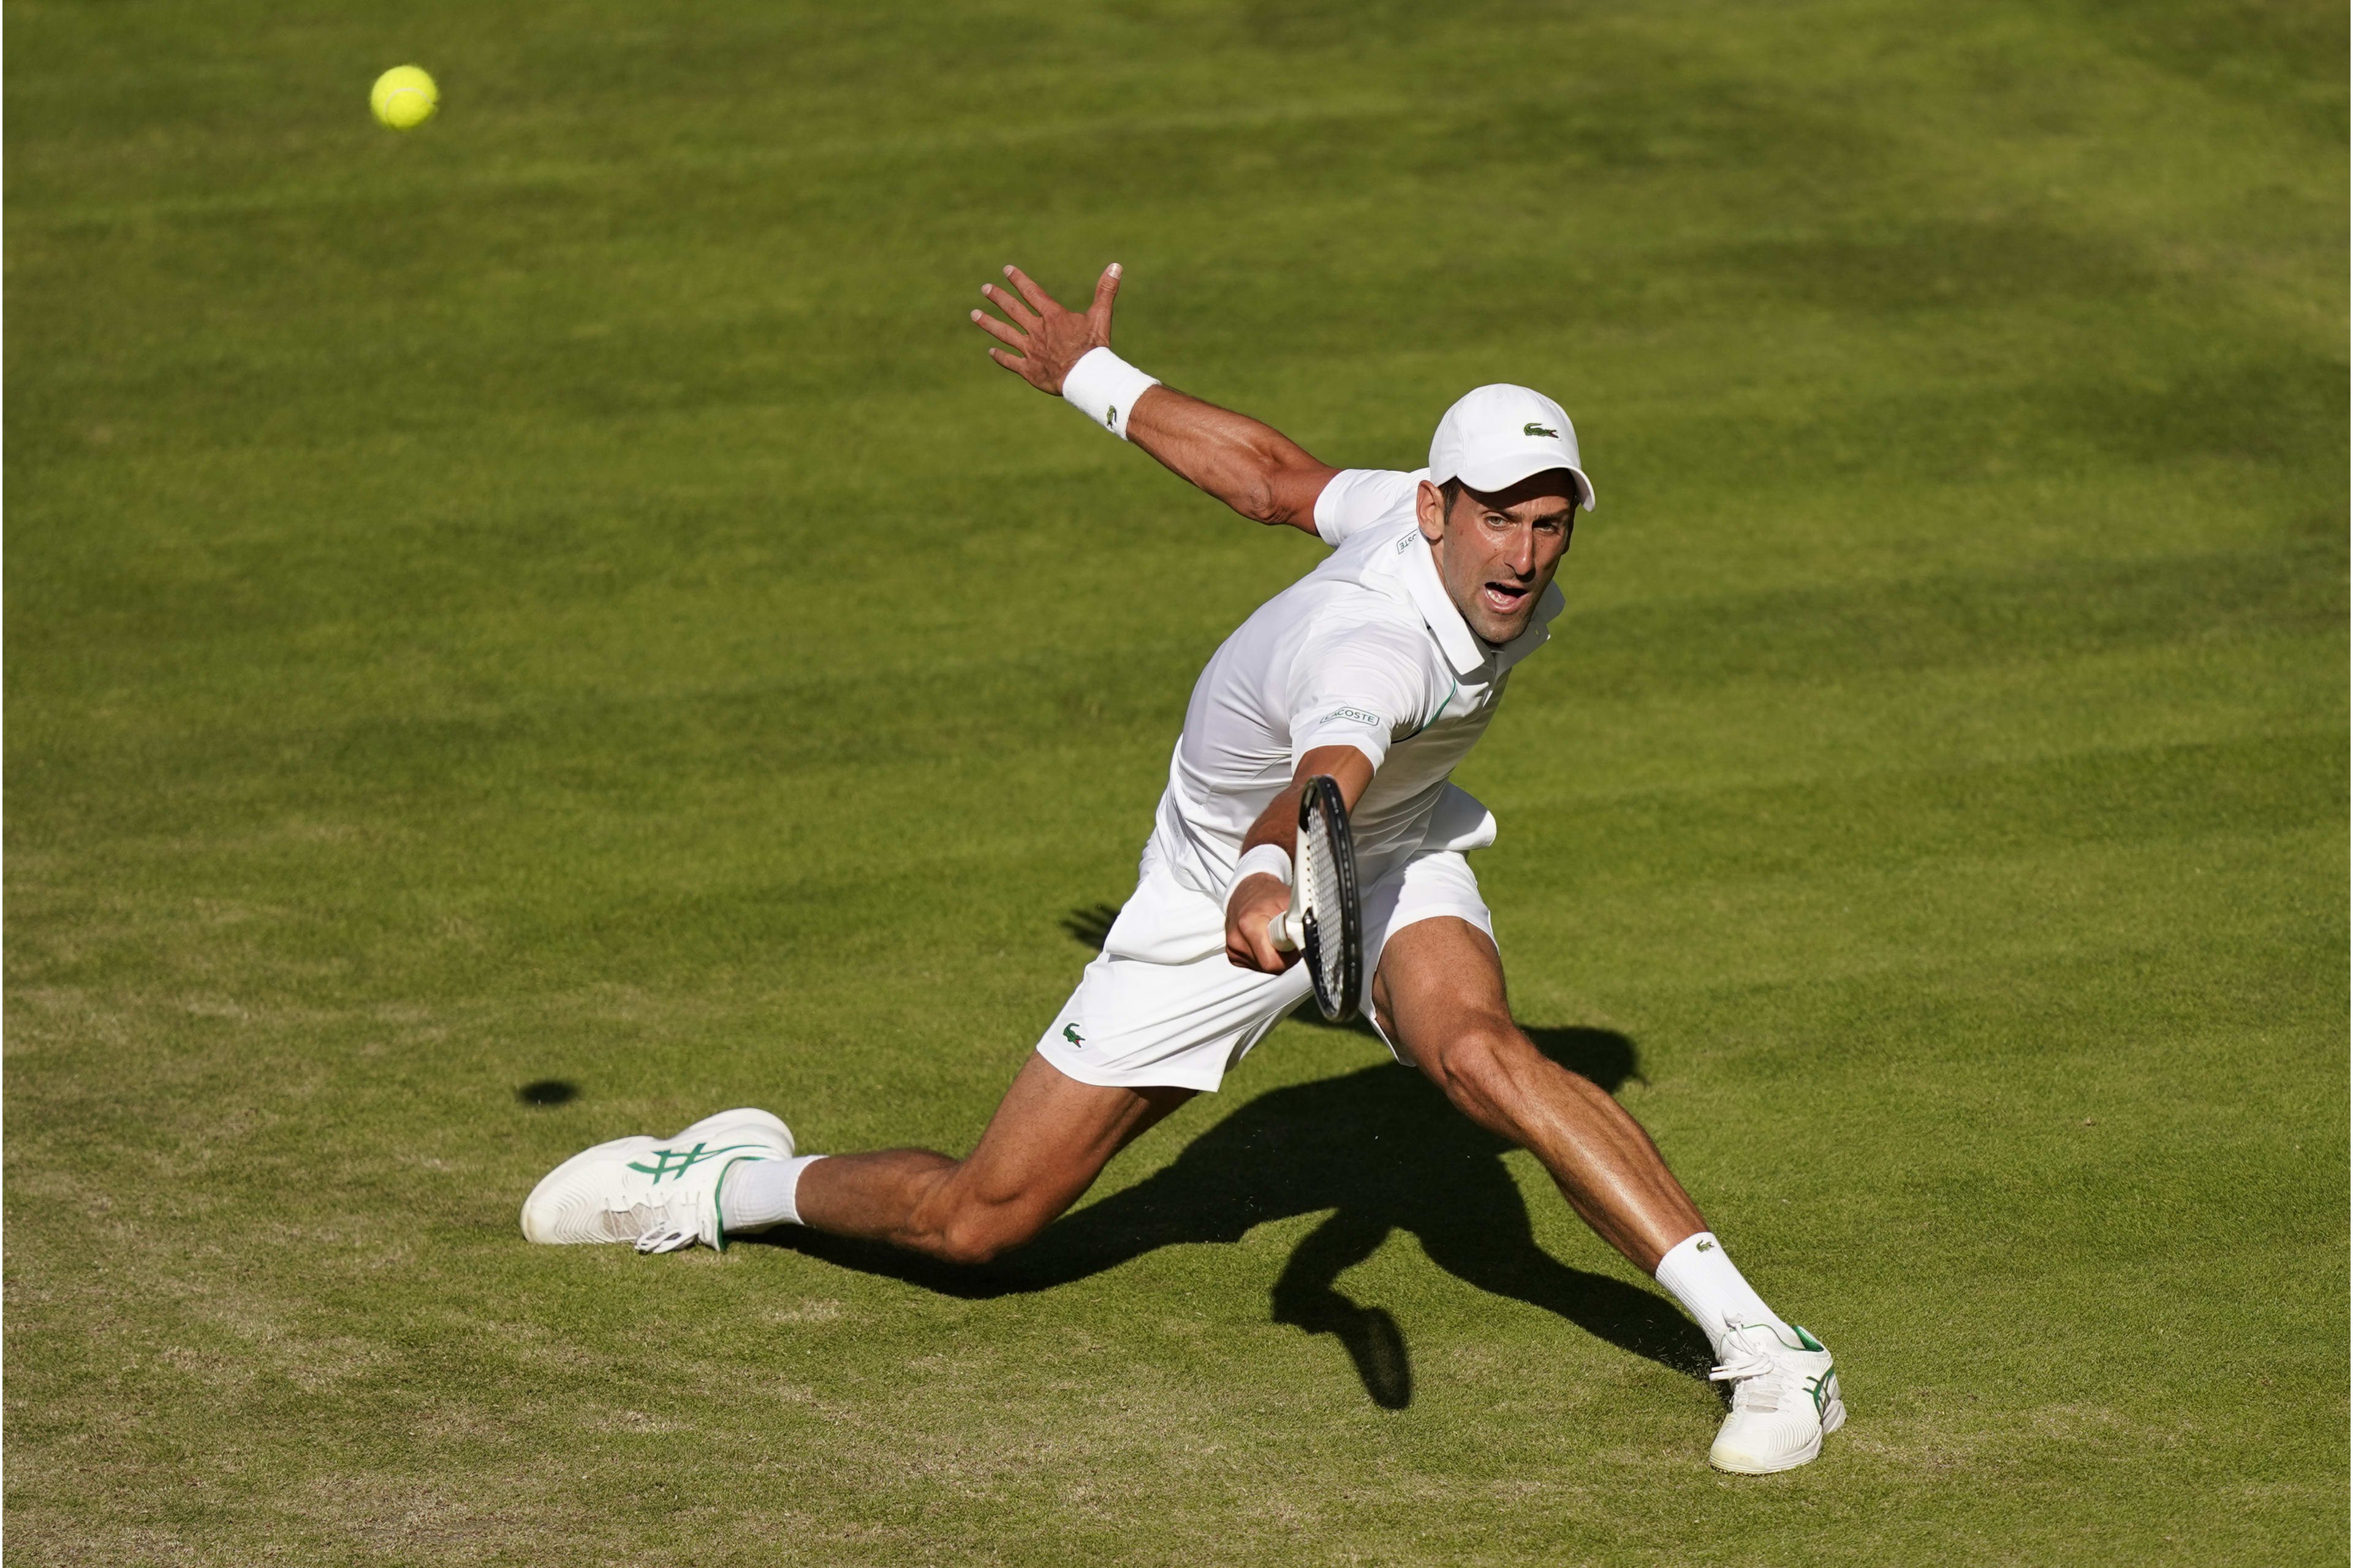 Djokovic vs. Kyrgios in Wimbledon final 21st Slam or 1st?  Tennis.com